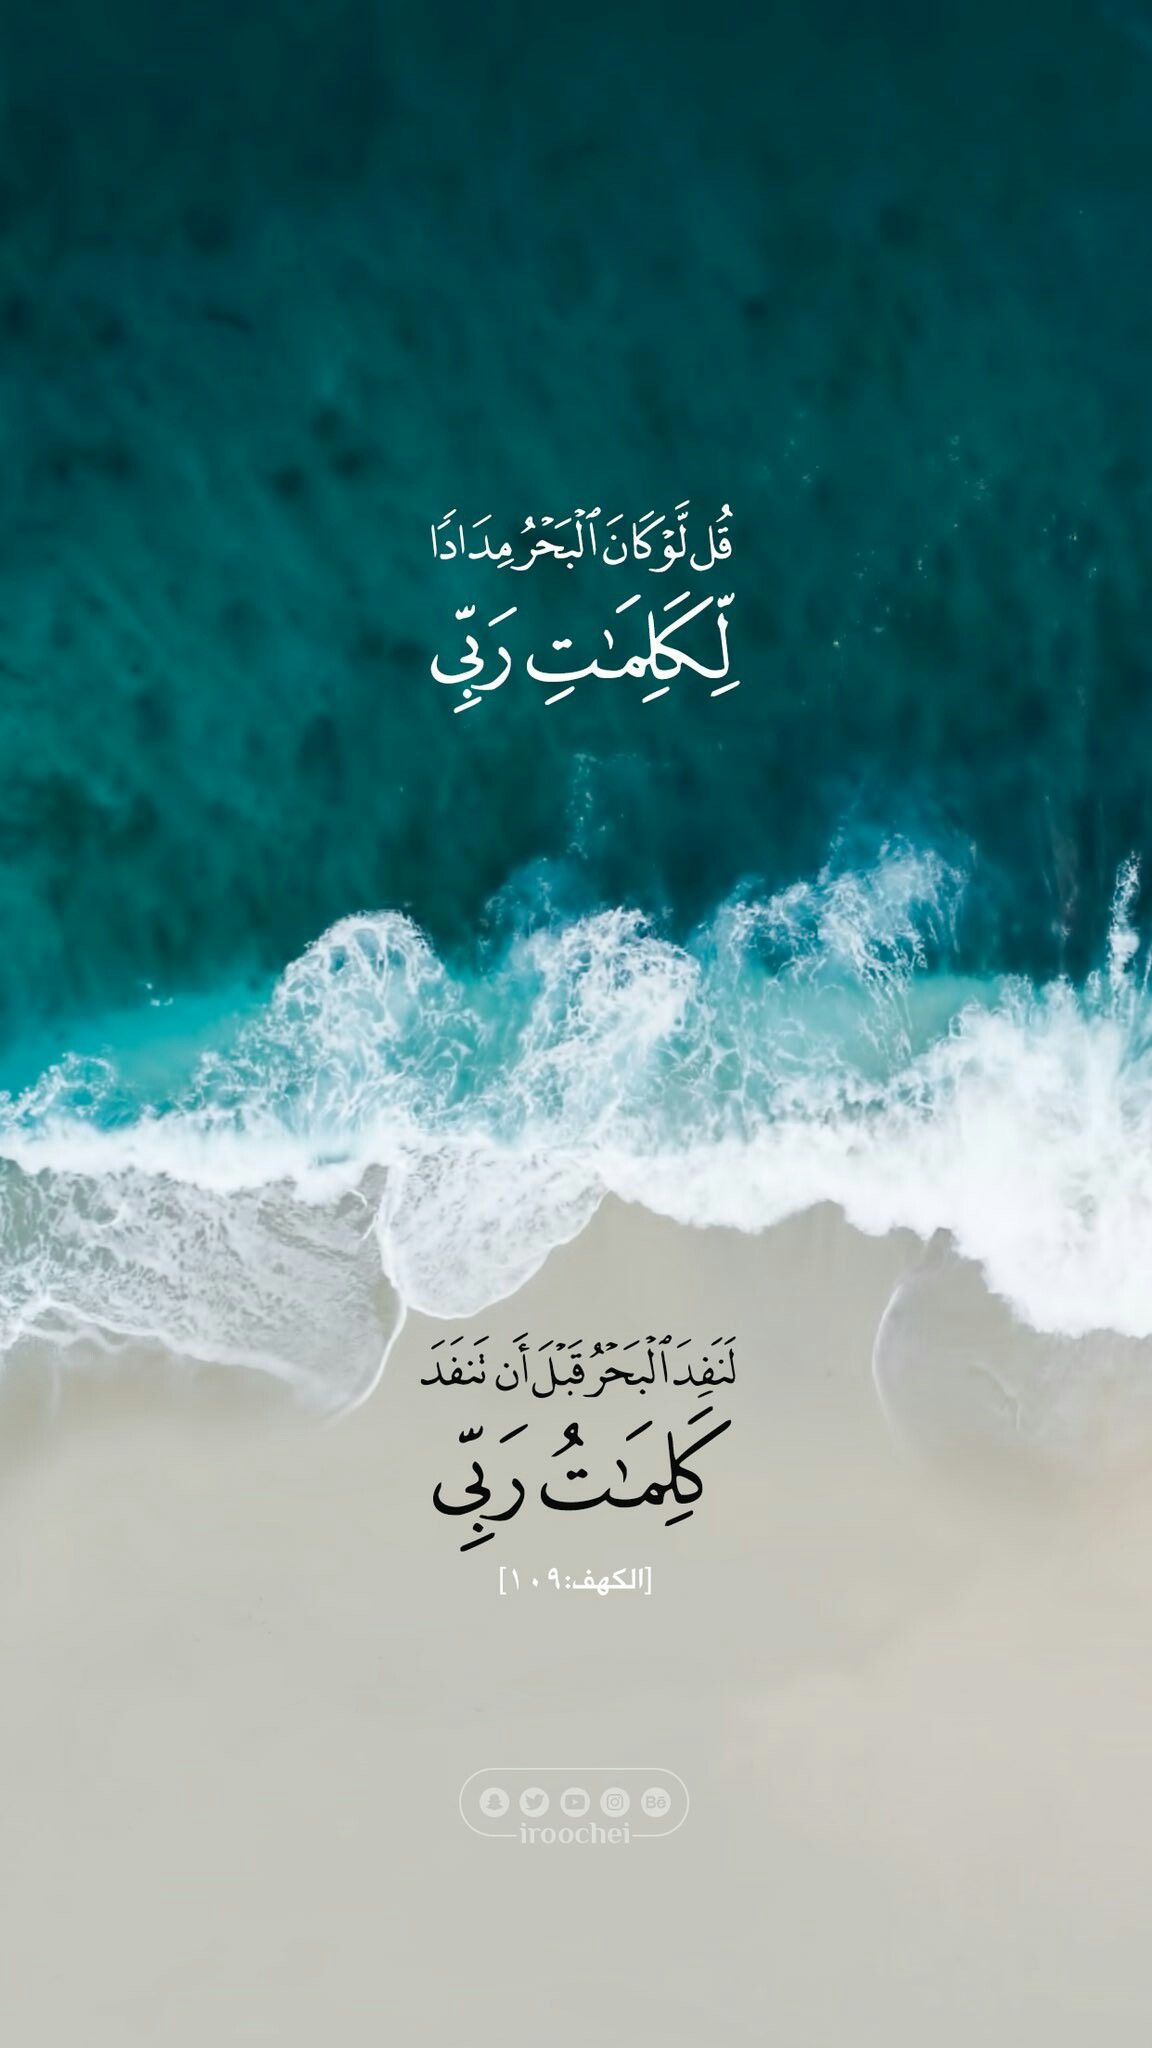 islamische tapete iphone,text,schriftart,türkis,himmel,welle